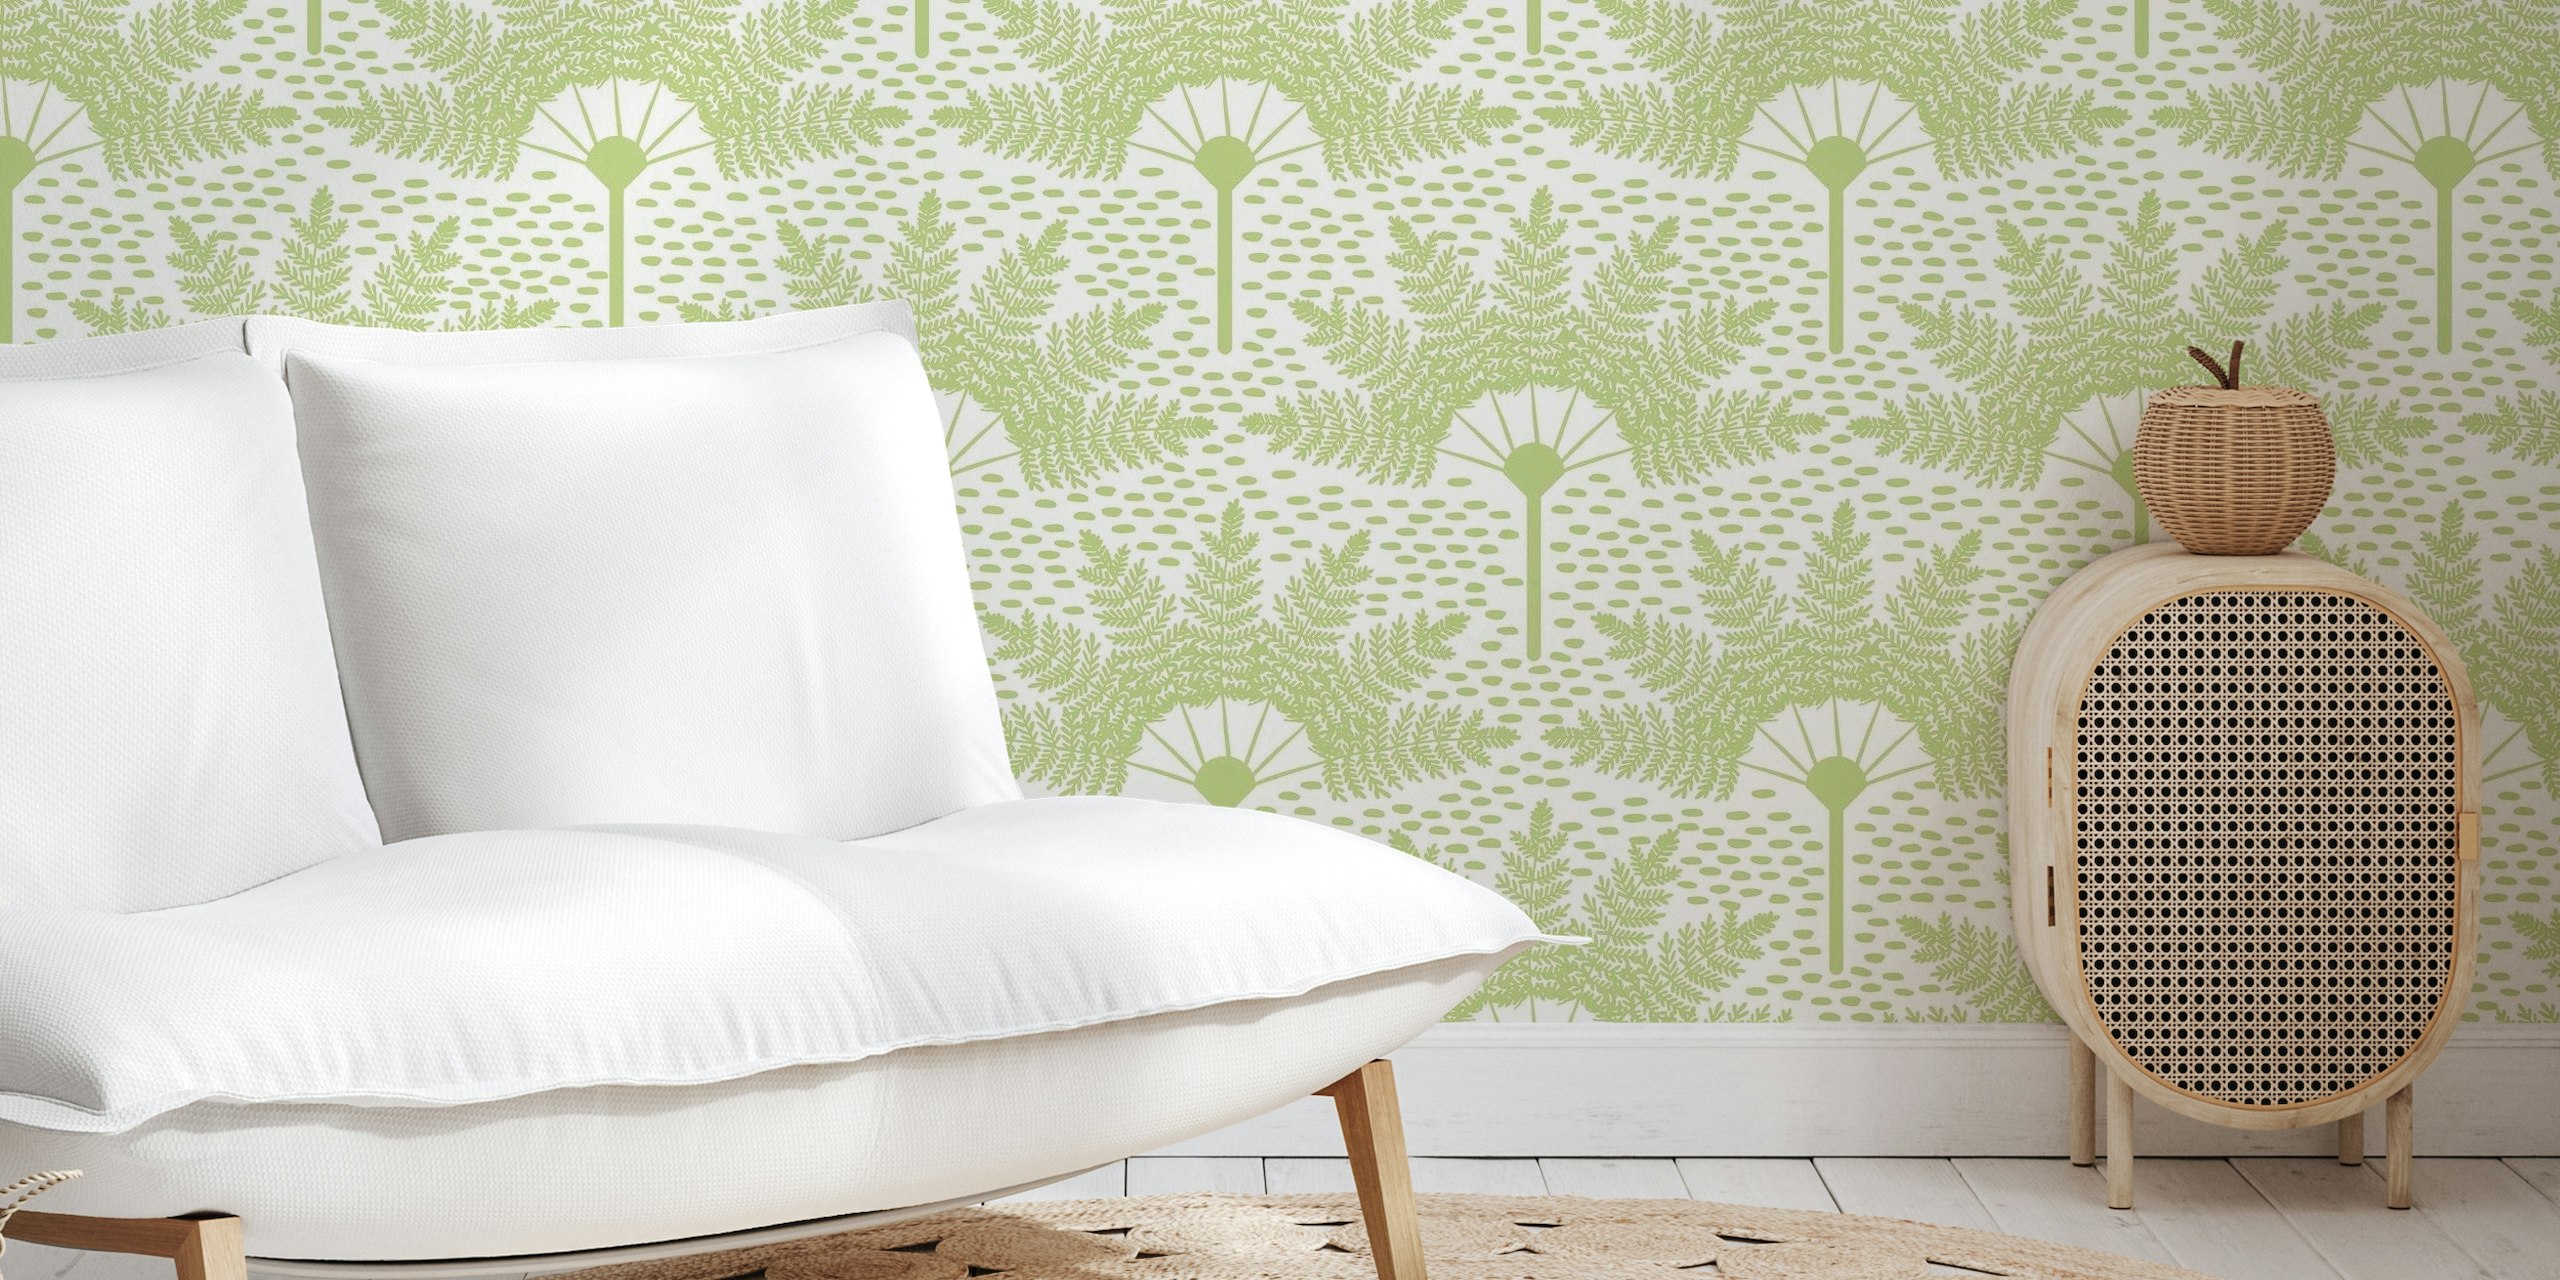 Elegant pastel green palm pattern wall mural for modern home decor